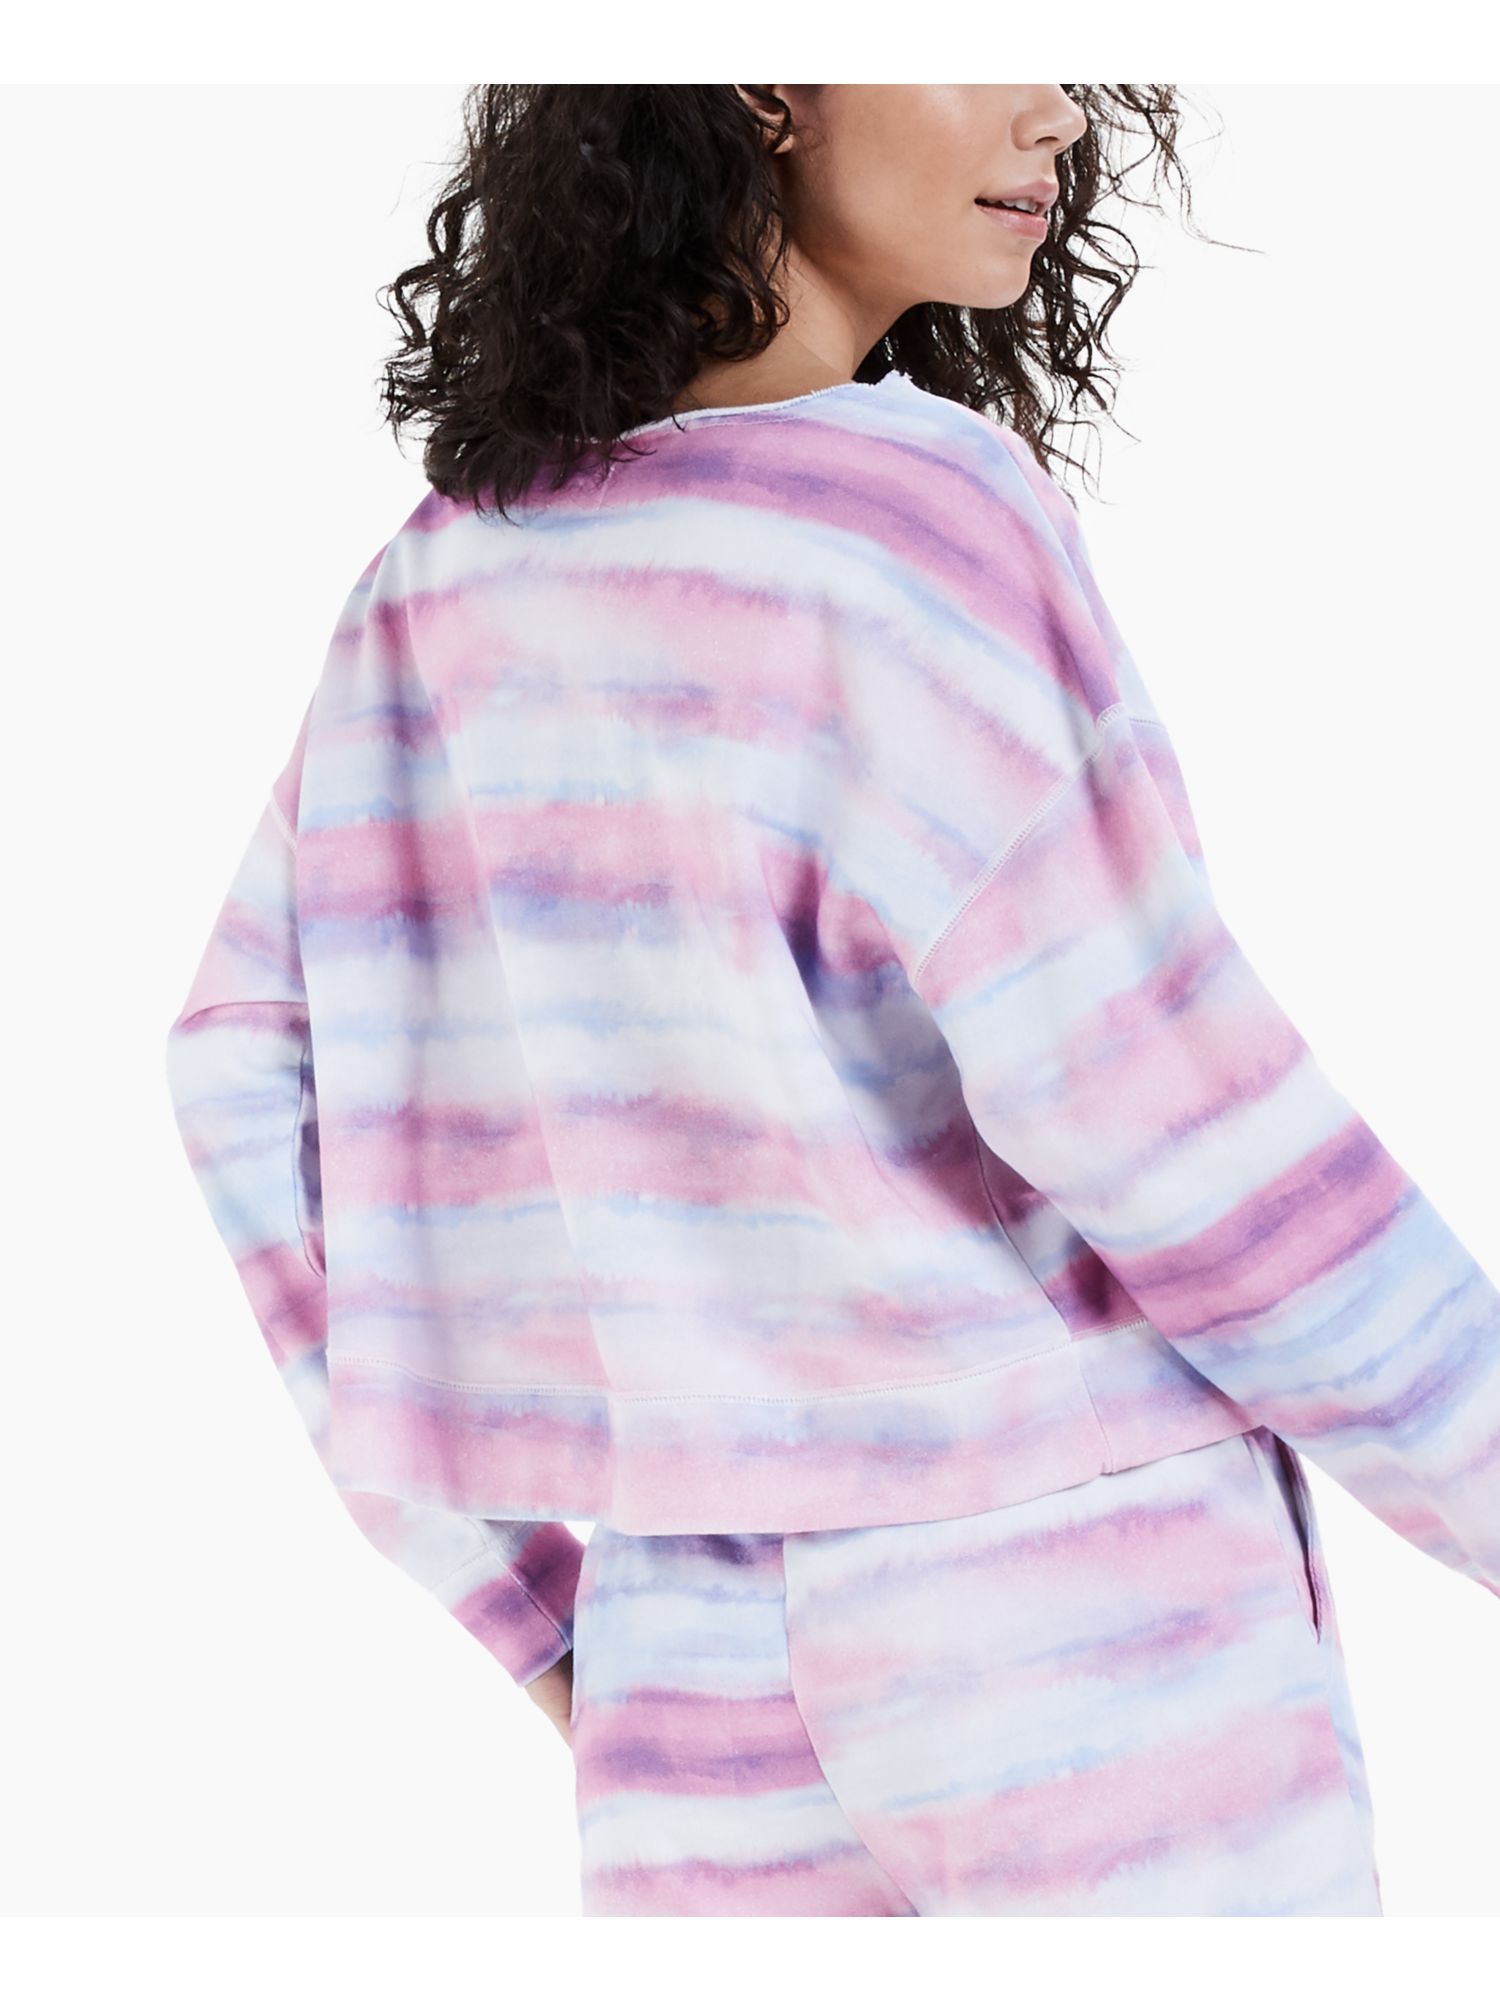 JENNI Intimates Pink French Terry Crew Neck Striped Sleep Shirt Pajama Top L